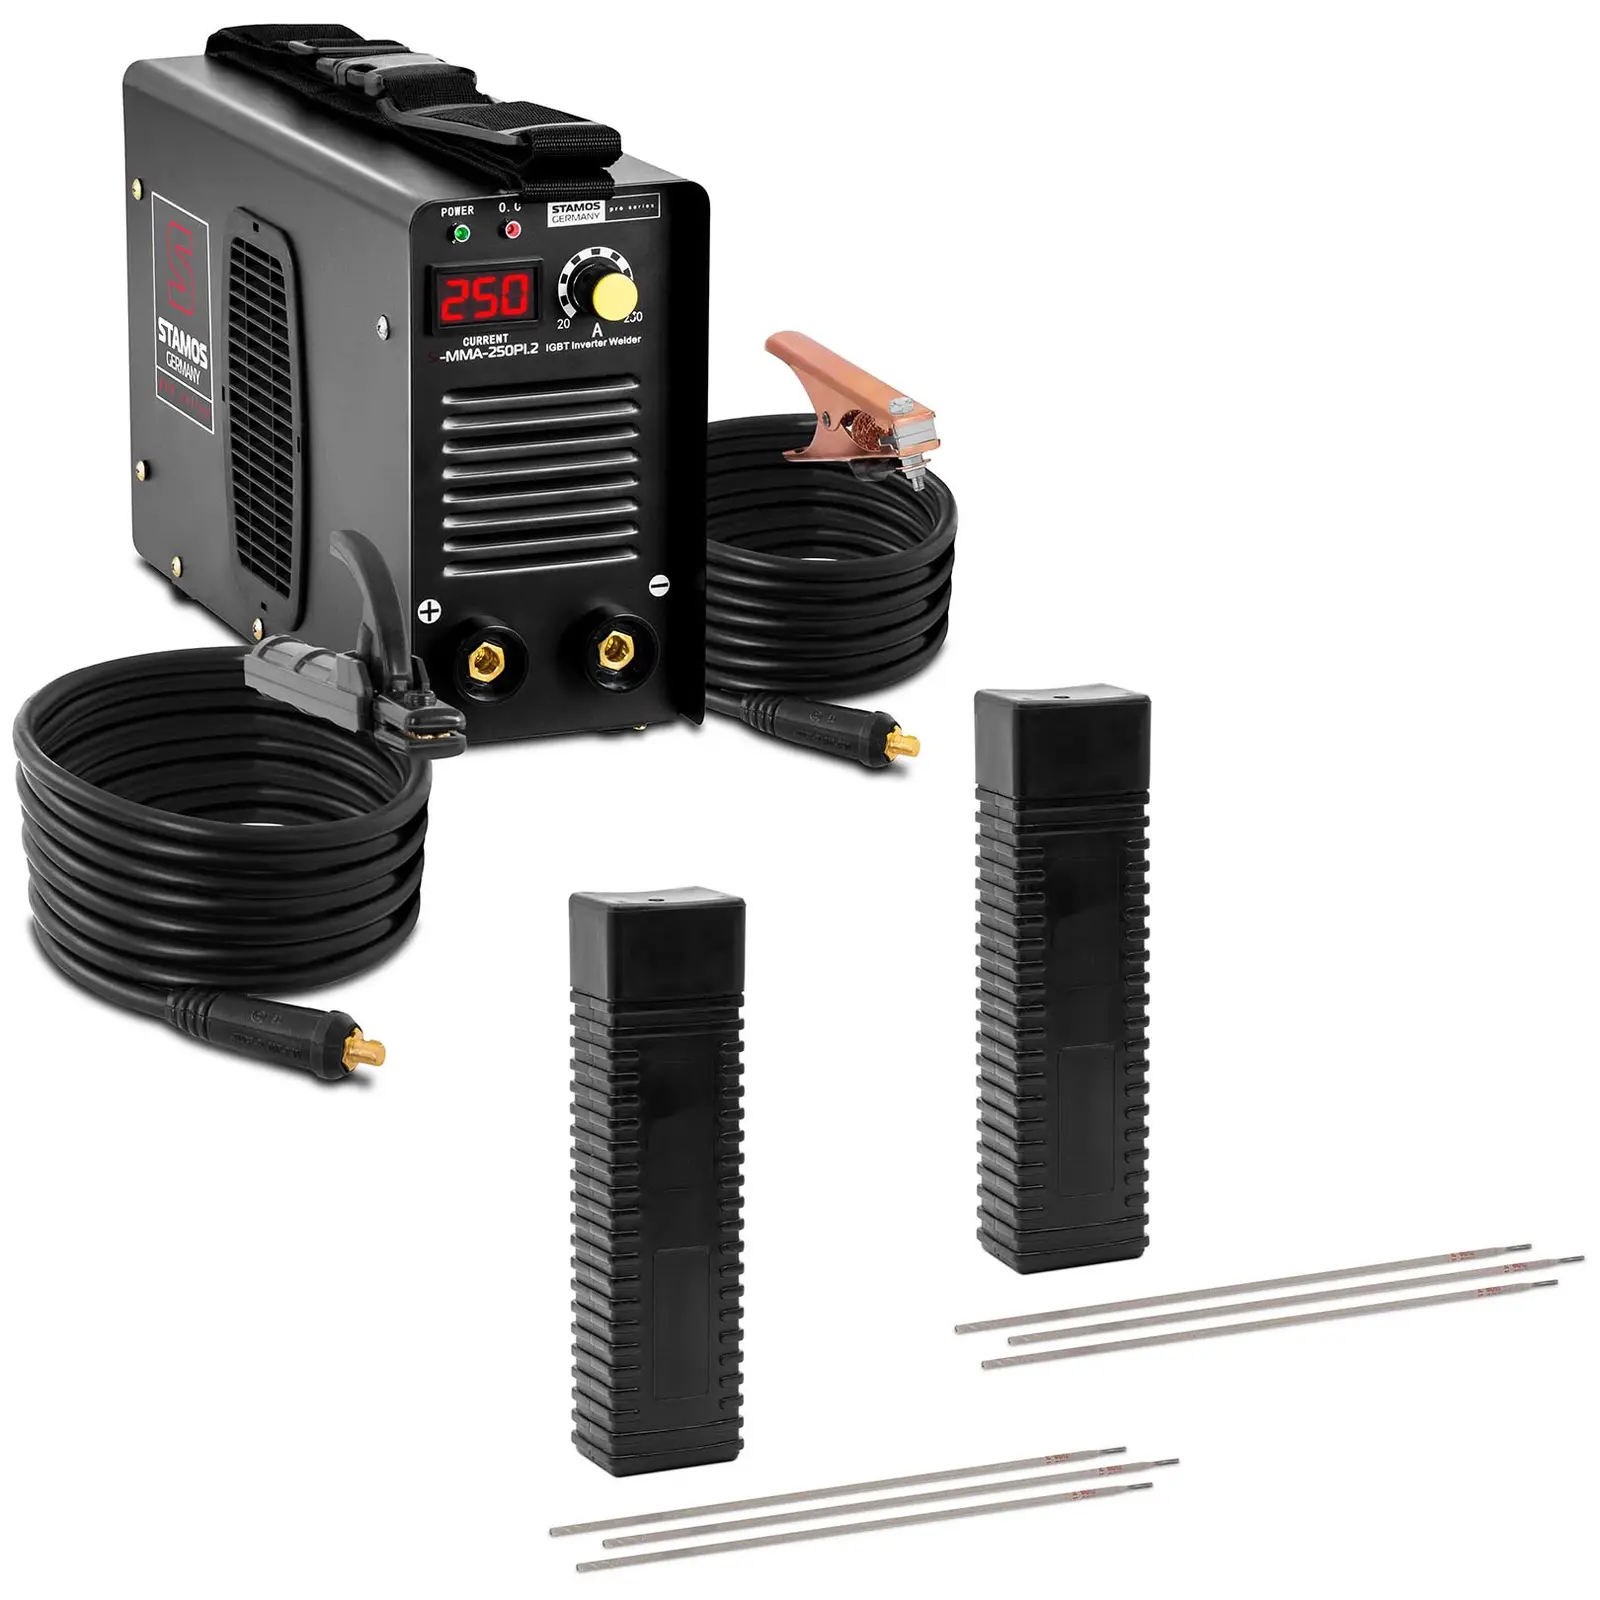 Welding set Electrode welder - 250 A - 8 m cable - 60 % Duty Cycle - Electrodes E6013 - Rutile cellulose - Ø 3.2 x 350 mm - 2 x 5 kg